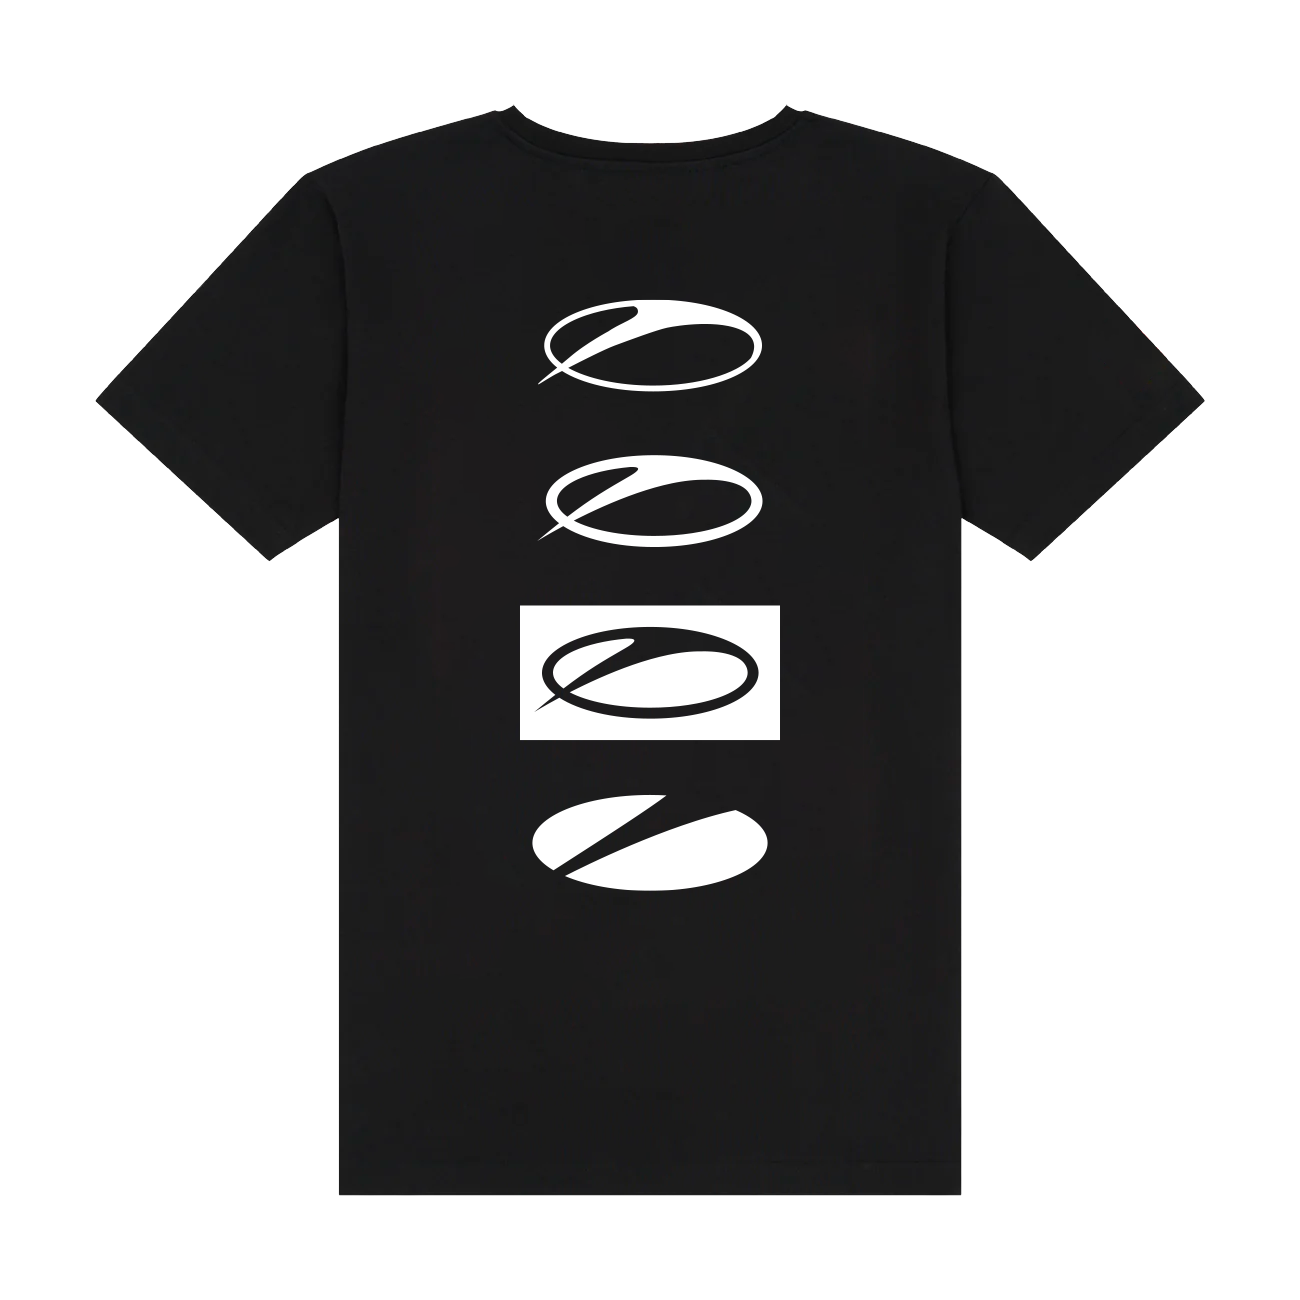 A State of Trance REFLEXION Logo Evolution t-shirt